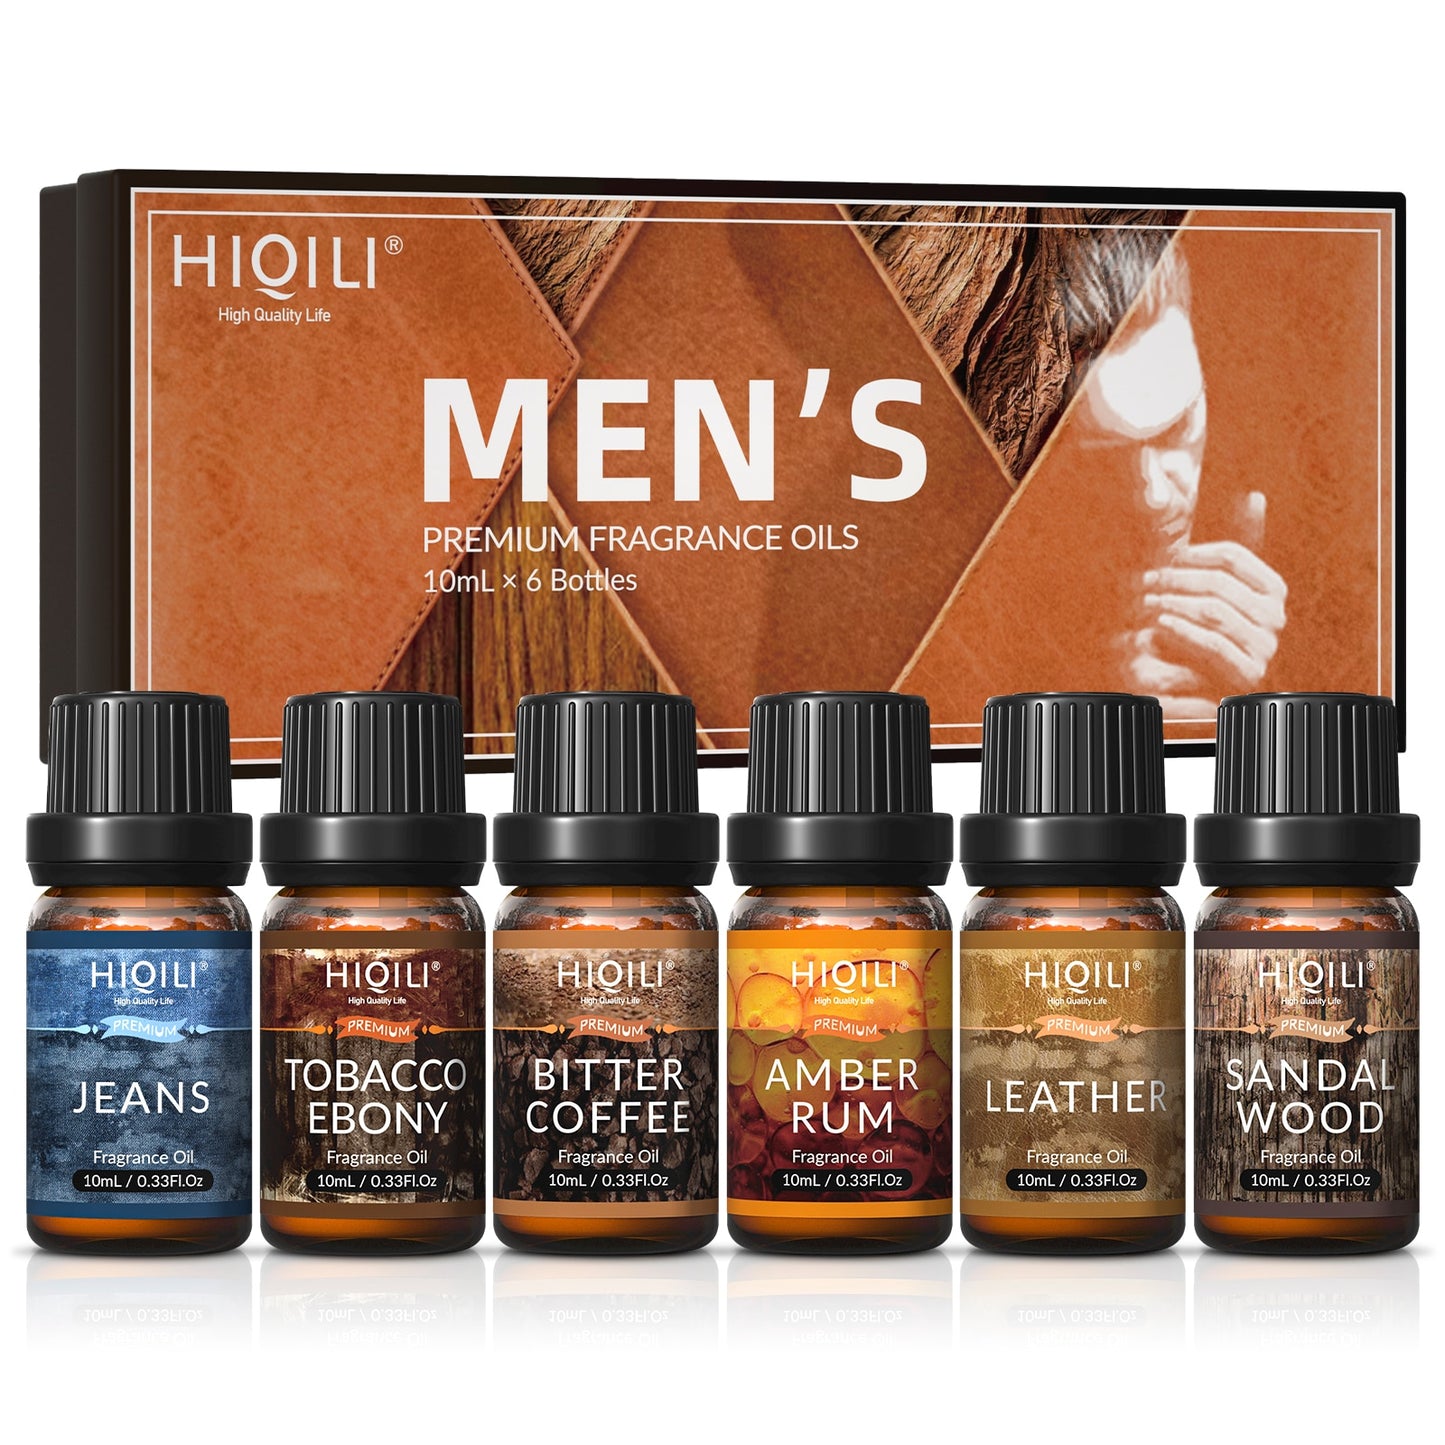 HIQILI Mens Fragrance Oils for Aromatherapy